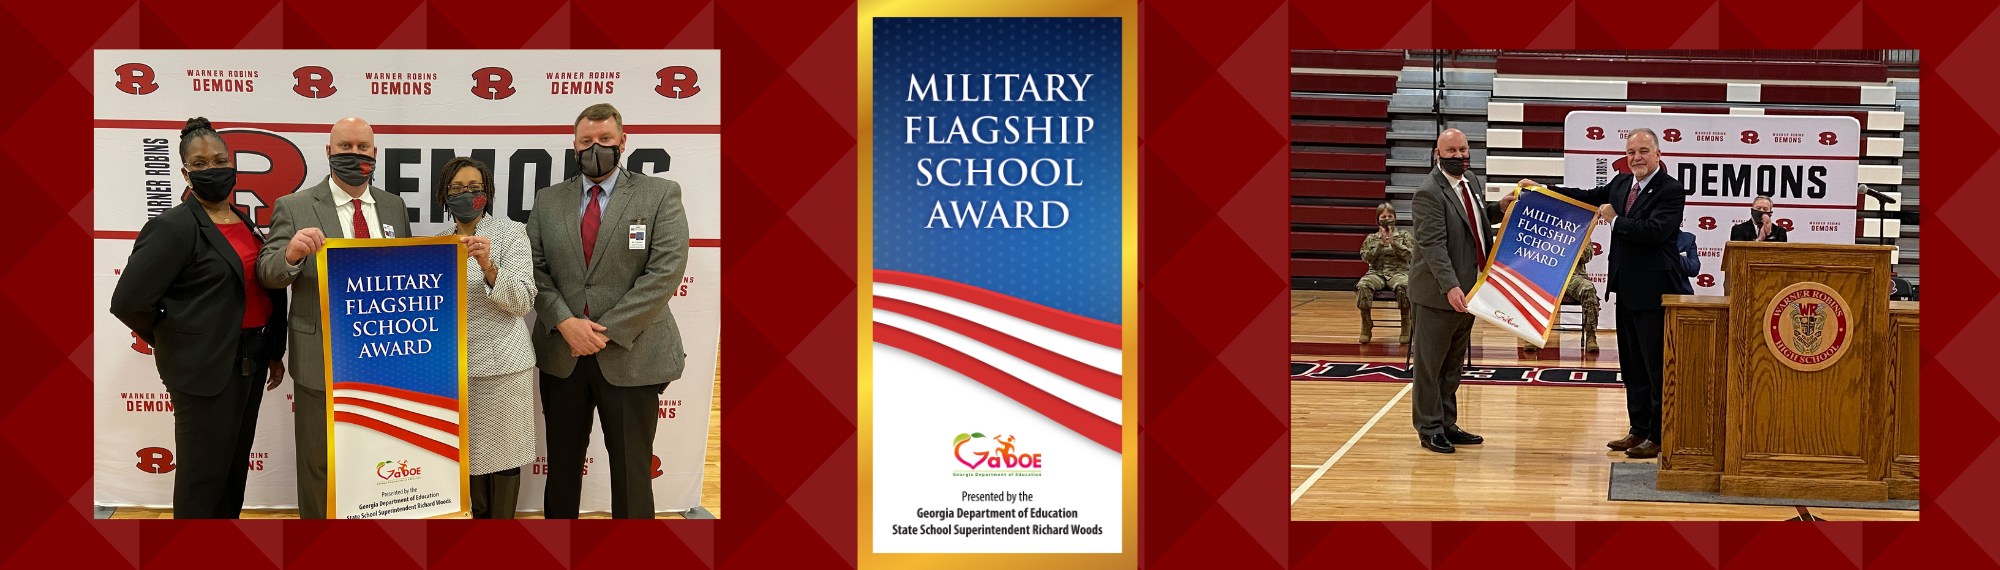 Military Flagship School Award